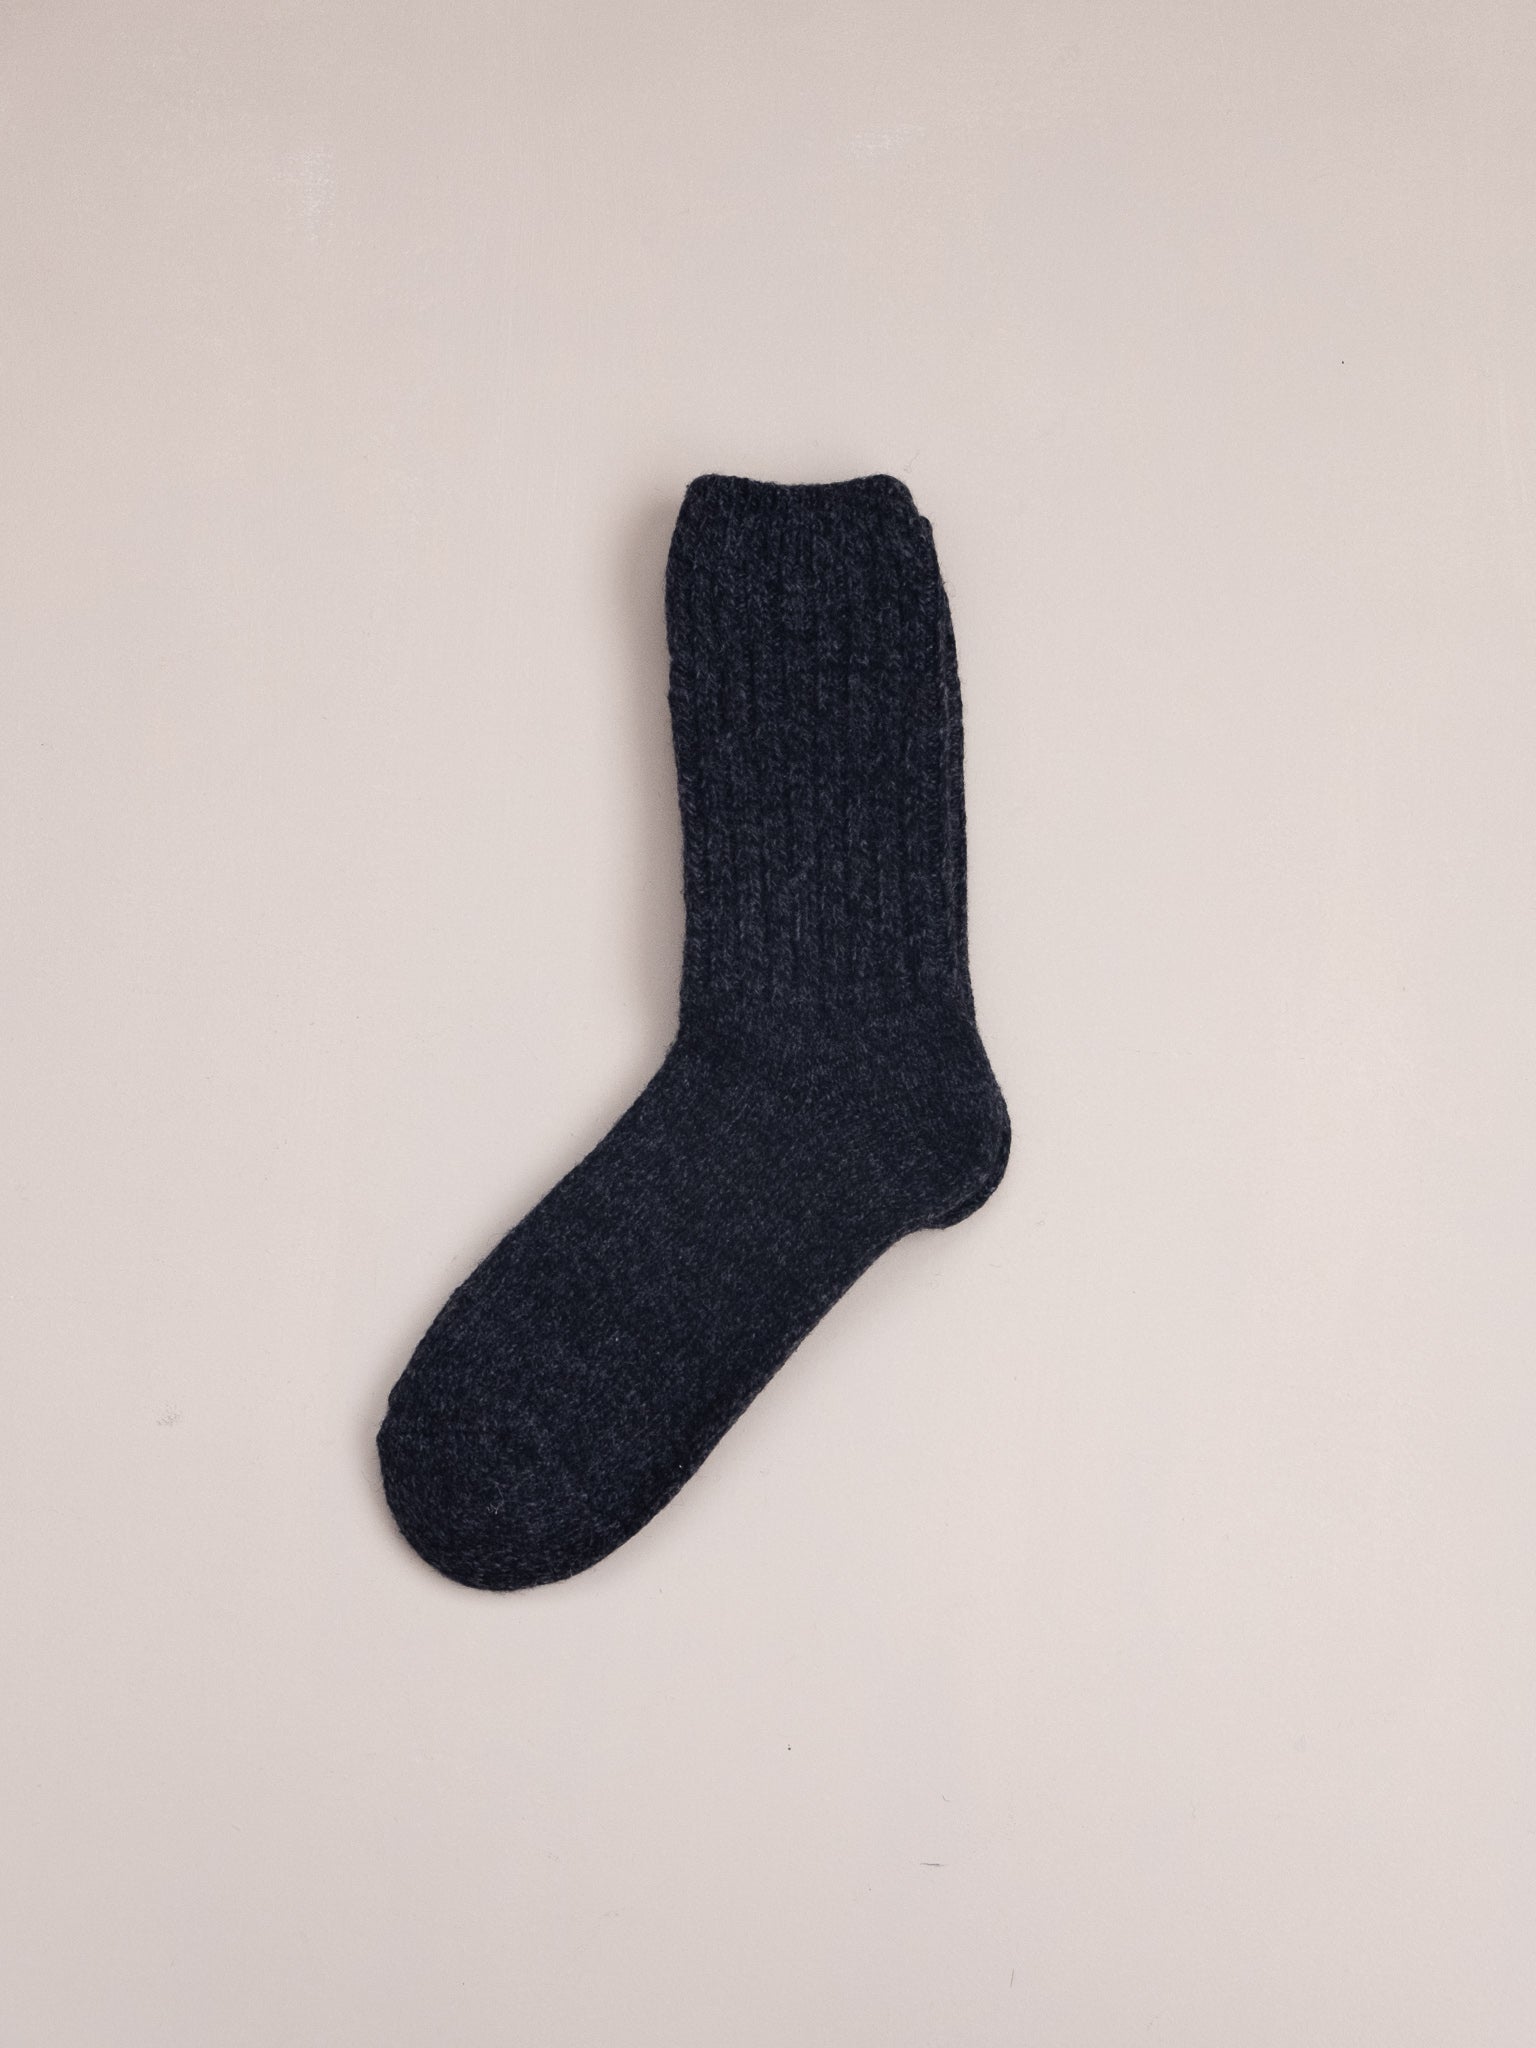 Ribbed Wool Socks - Charcoal